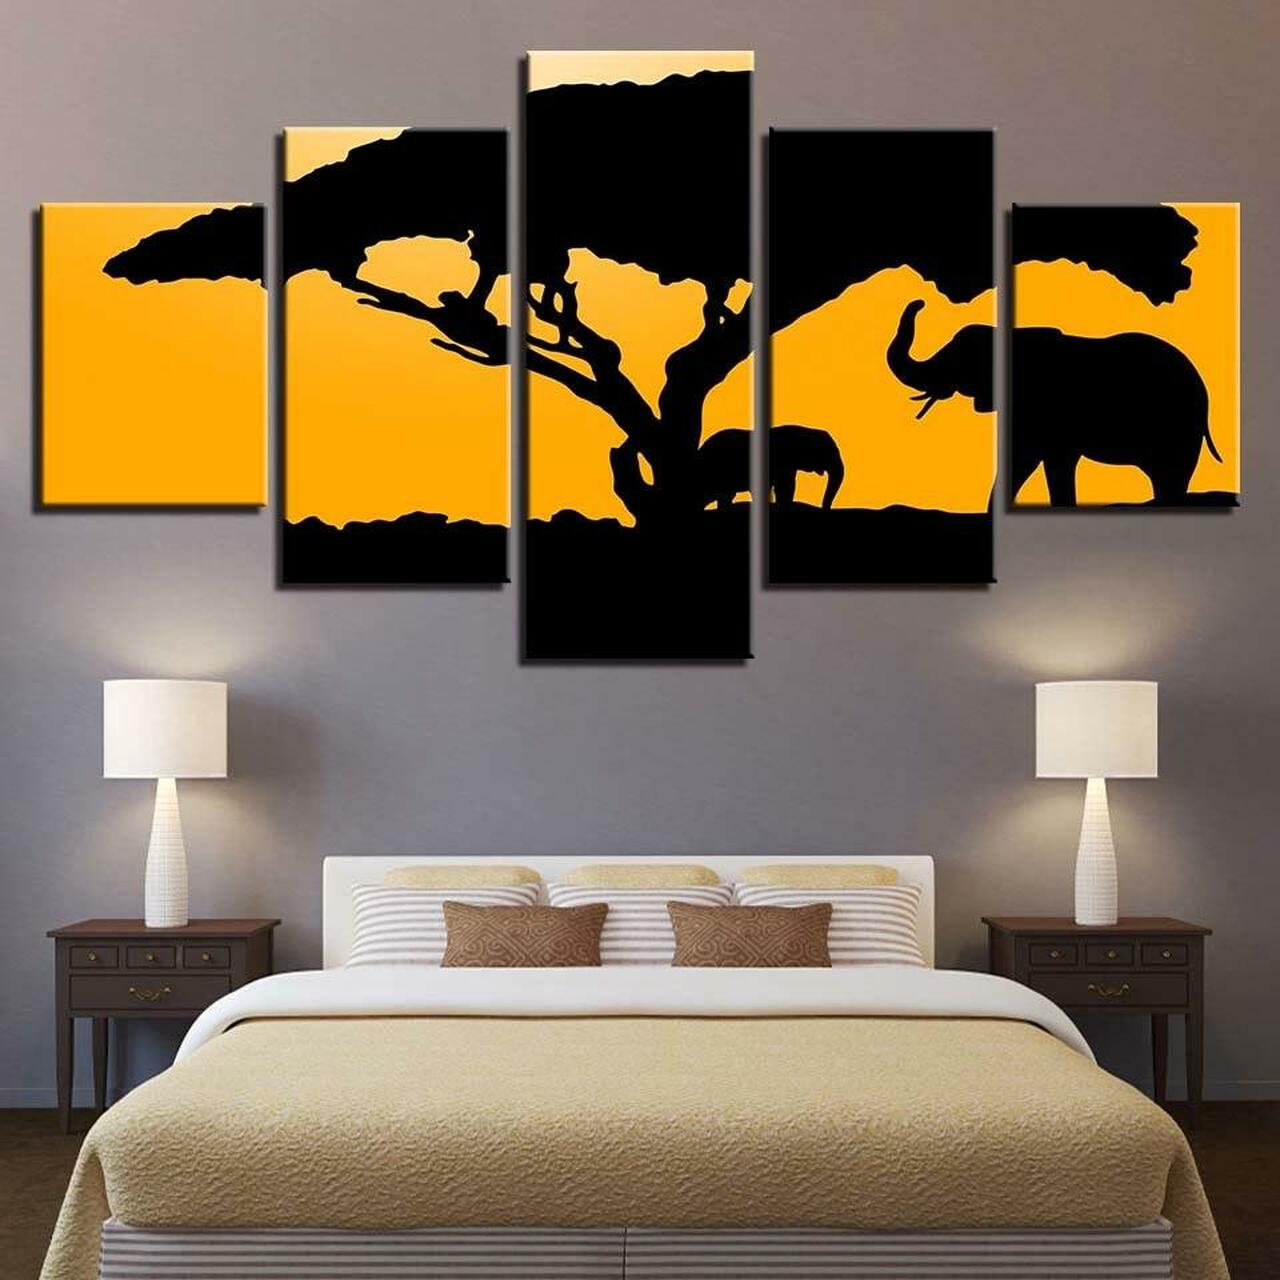 Sunset in Africa 5 Piece Canvas Art Wall Decor